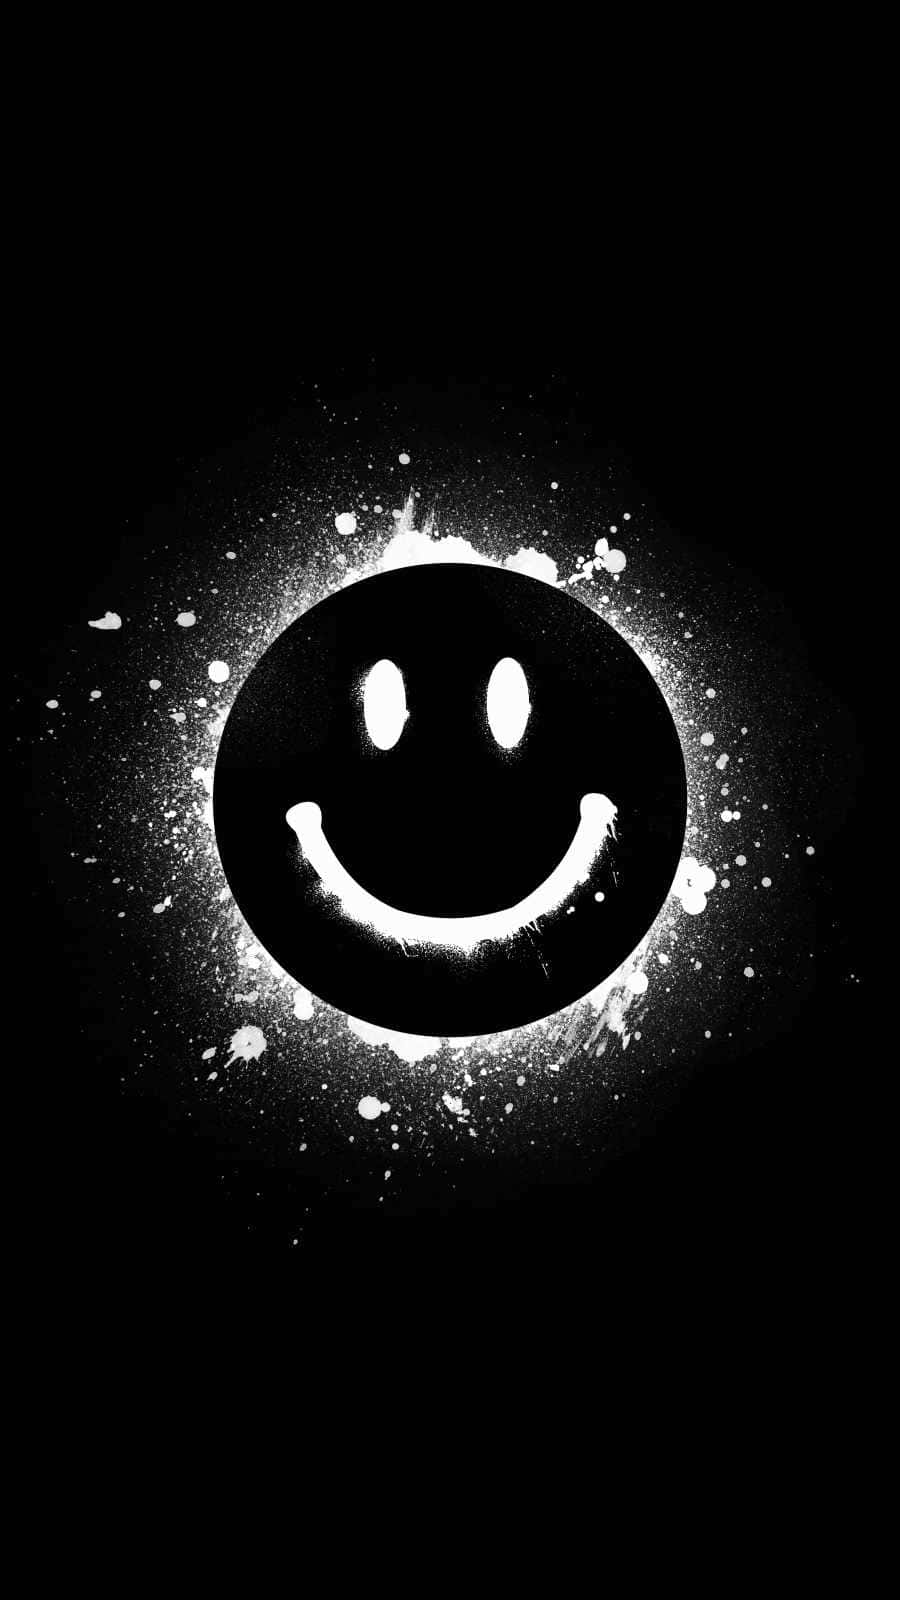 Enigmatic Black Smile On Grunge Background Background